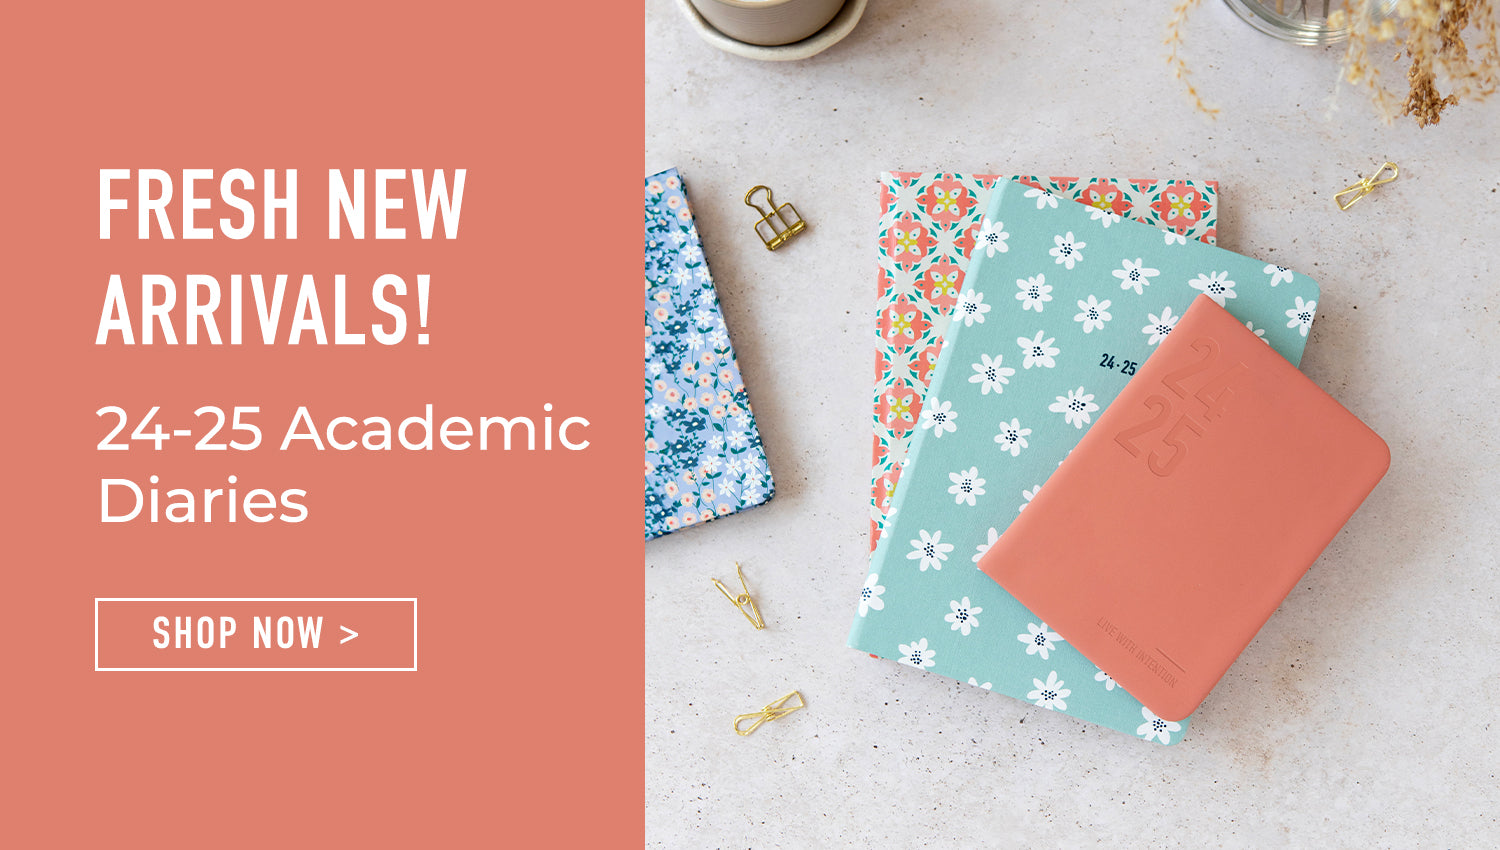 Fresh New Arrivals! 24-25 Academic Diaries